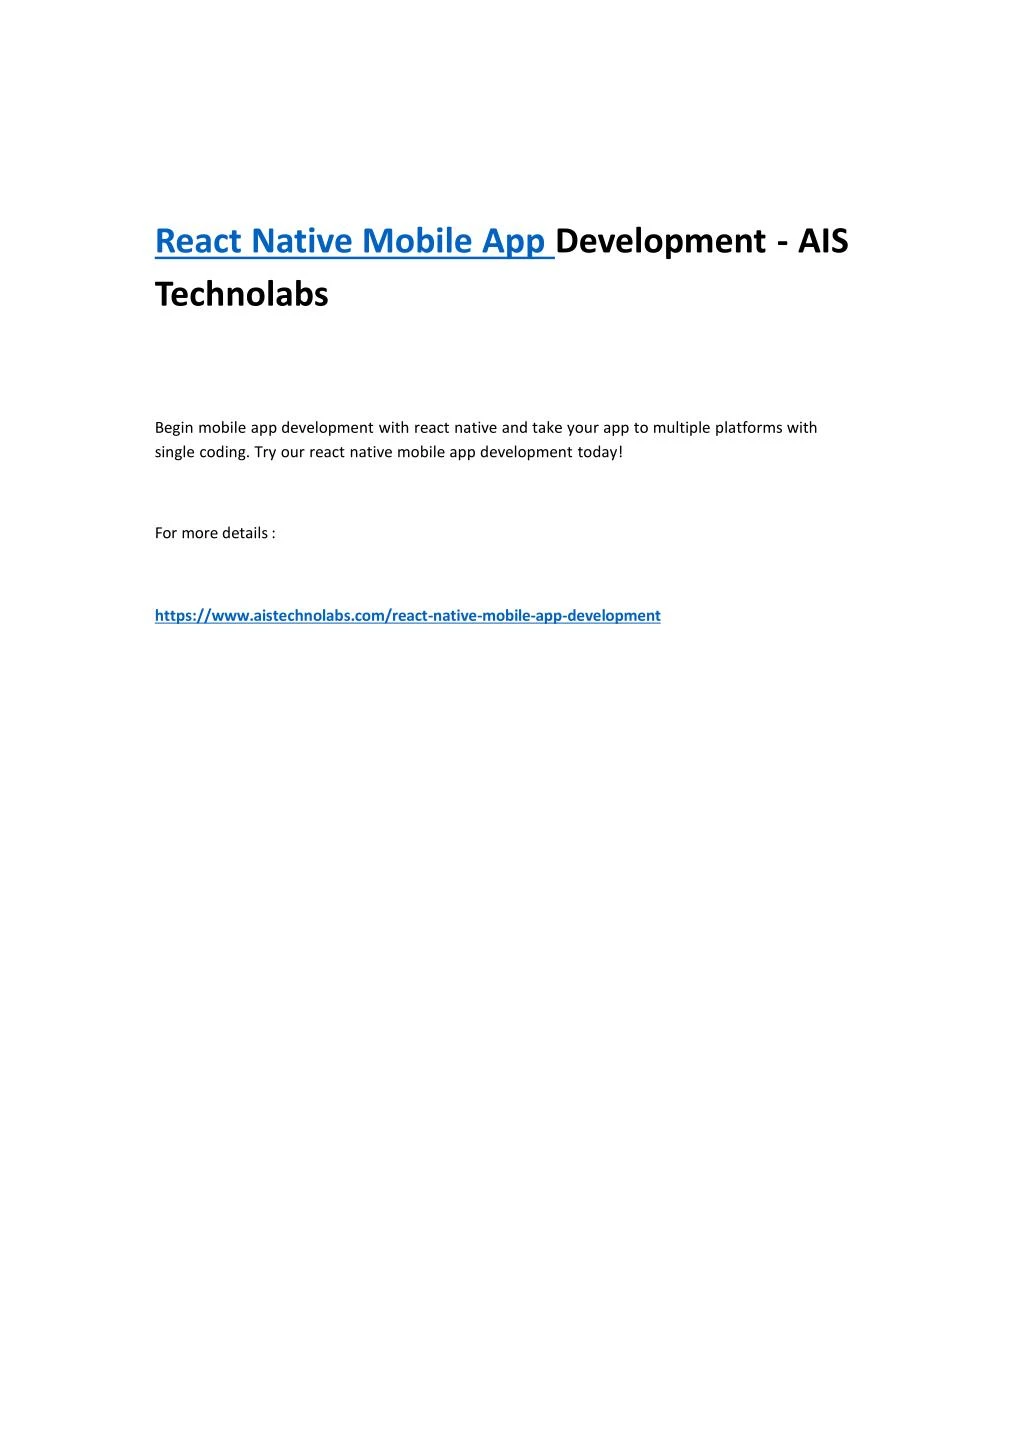 react native mobile app development ais technolabs n.